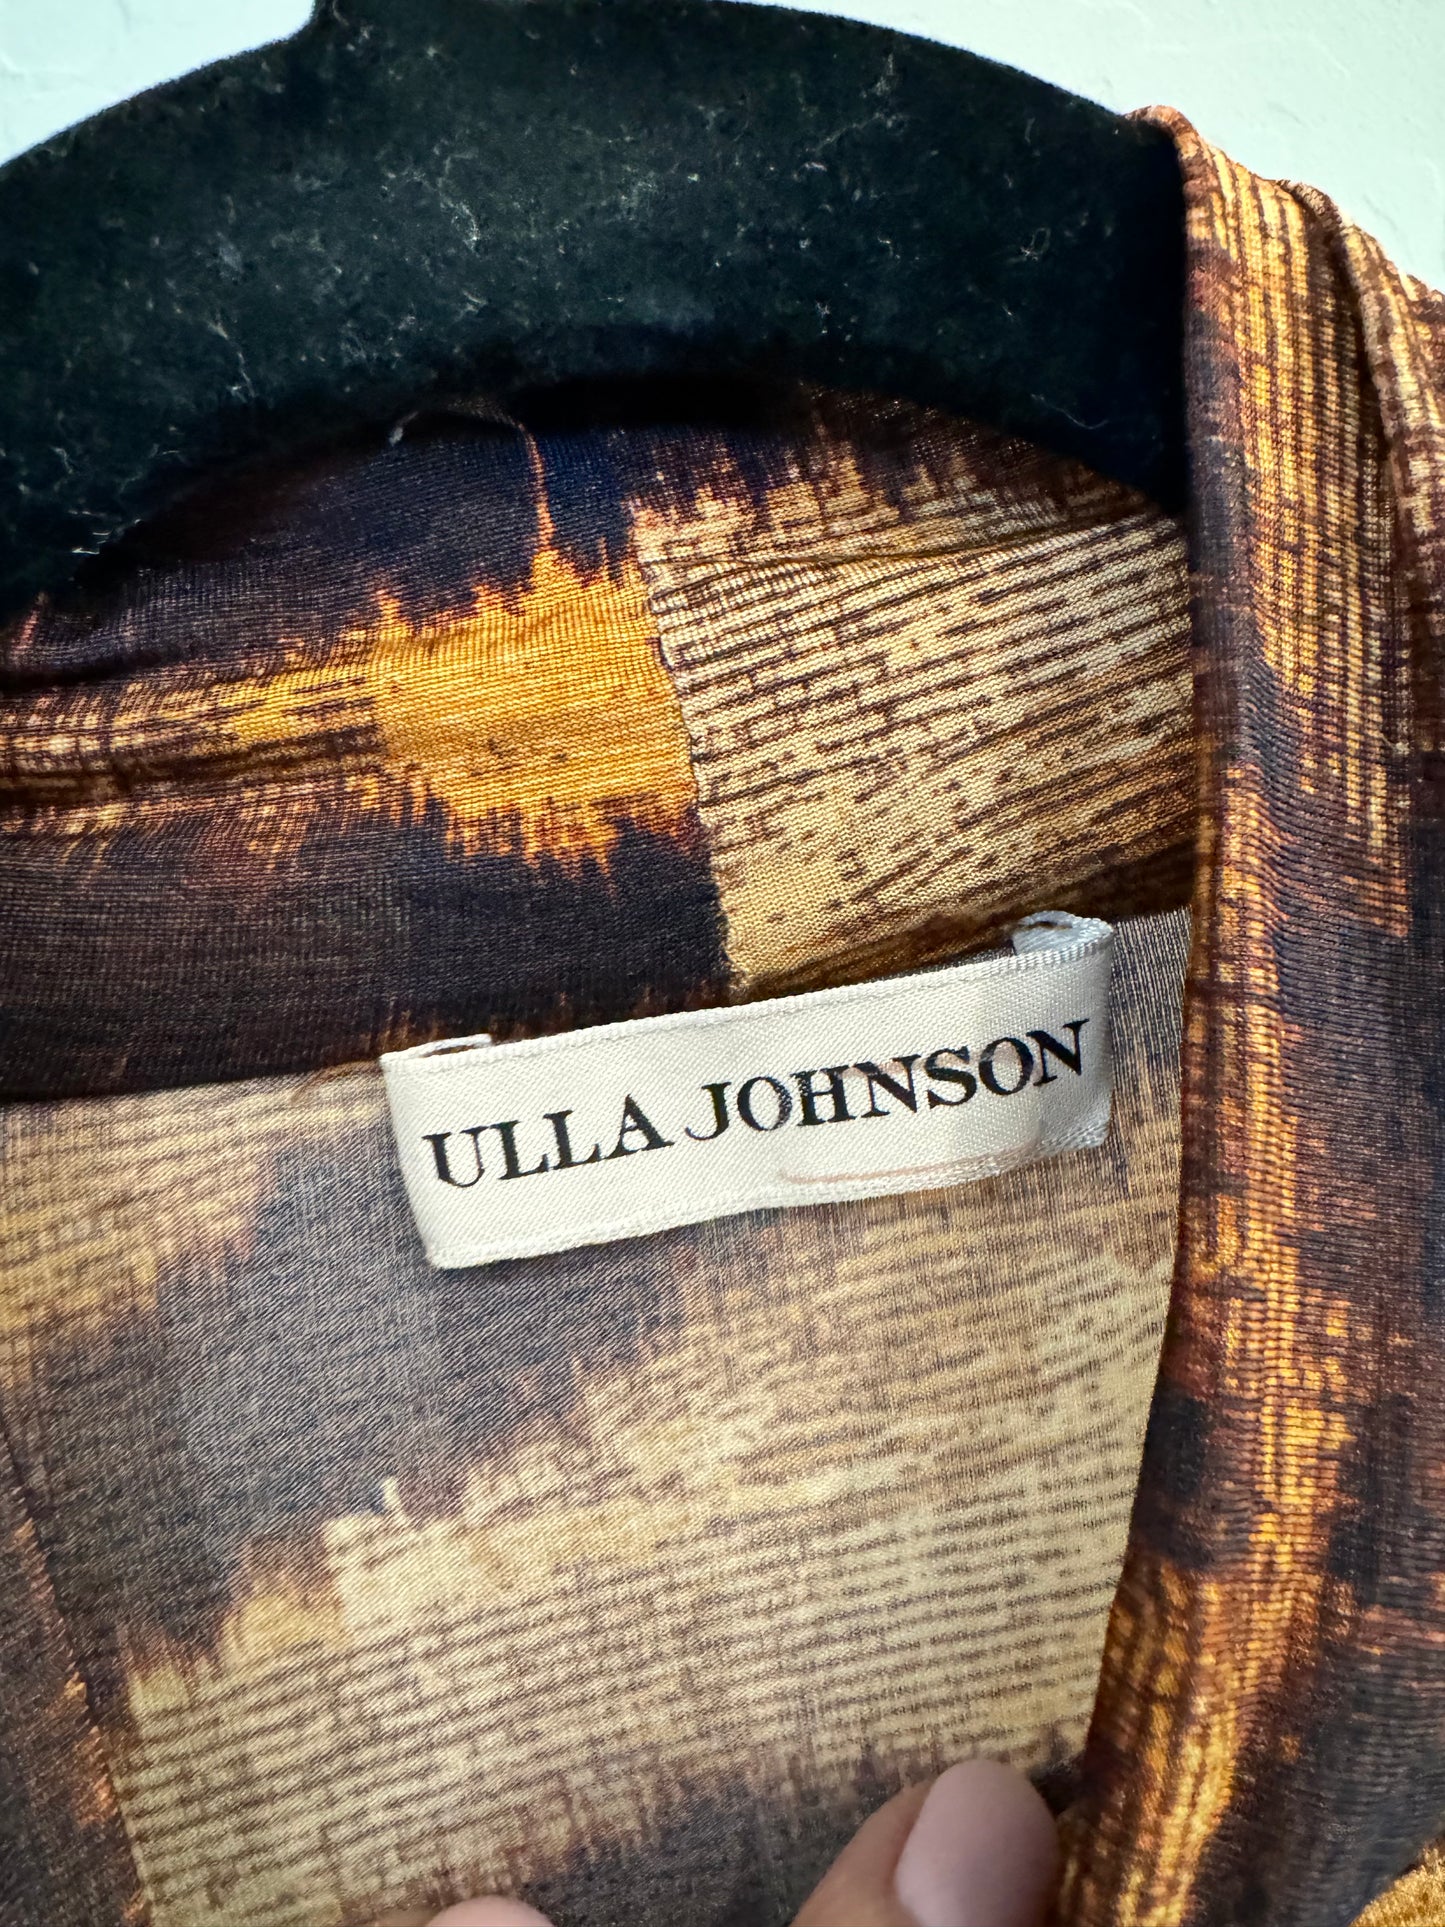 ULLA JOHNSON - Aurelia Tigers Eye Mesh Turtleneck Top (Pre-Loved) Size: M